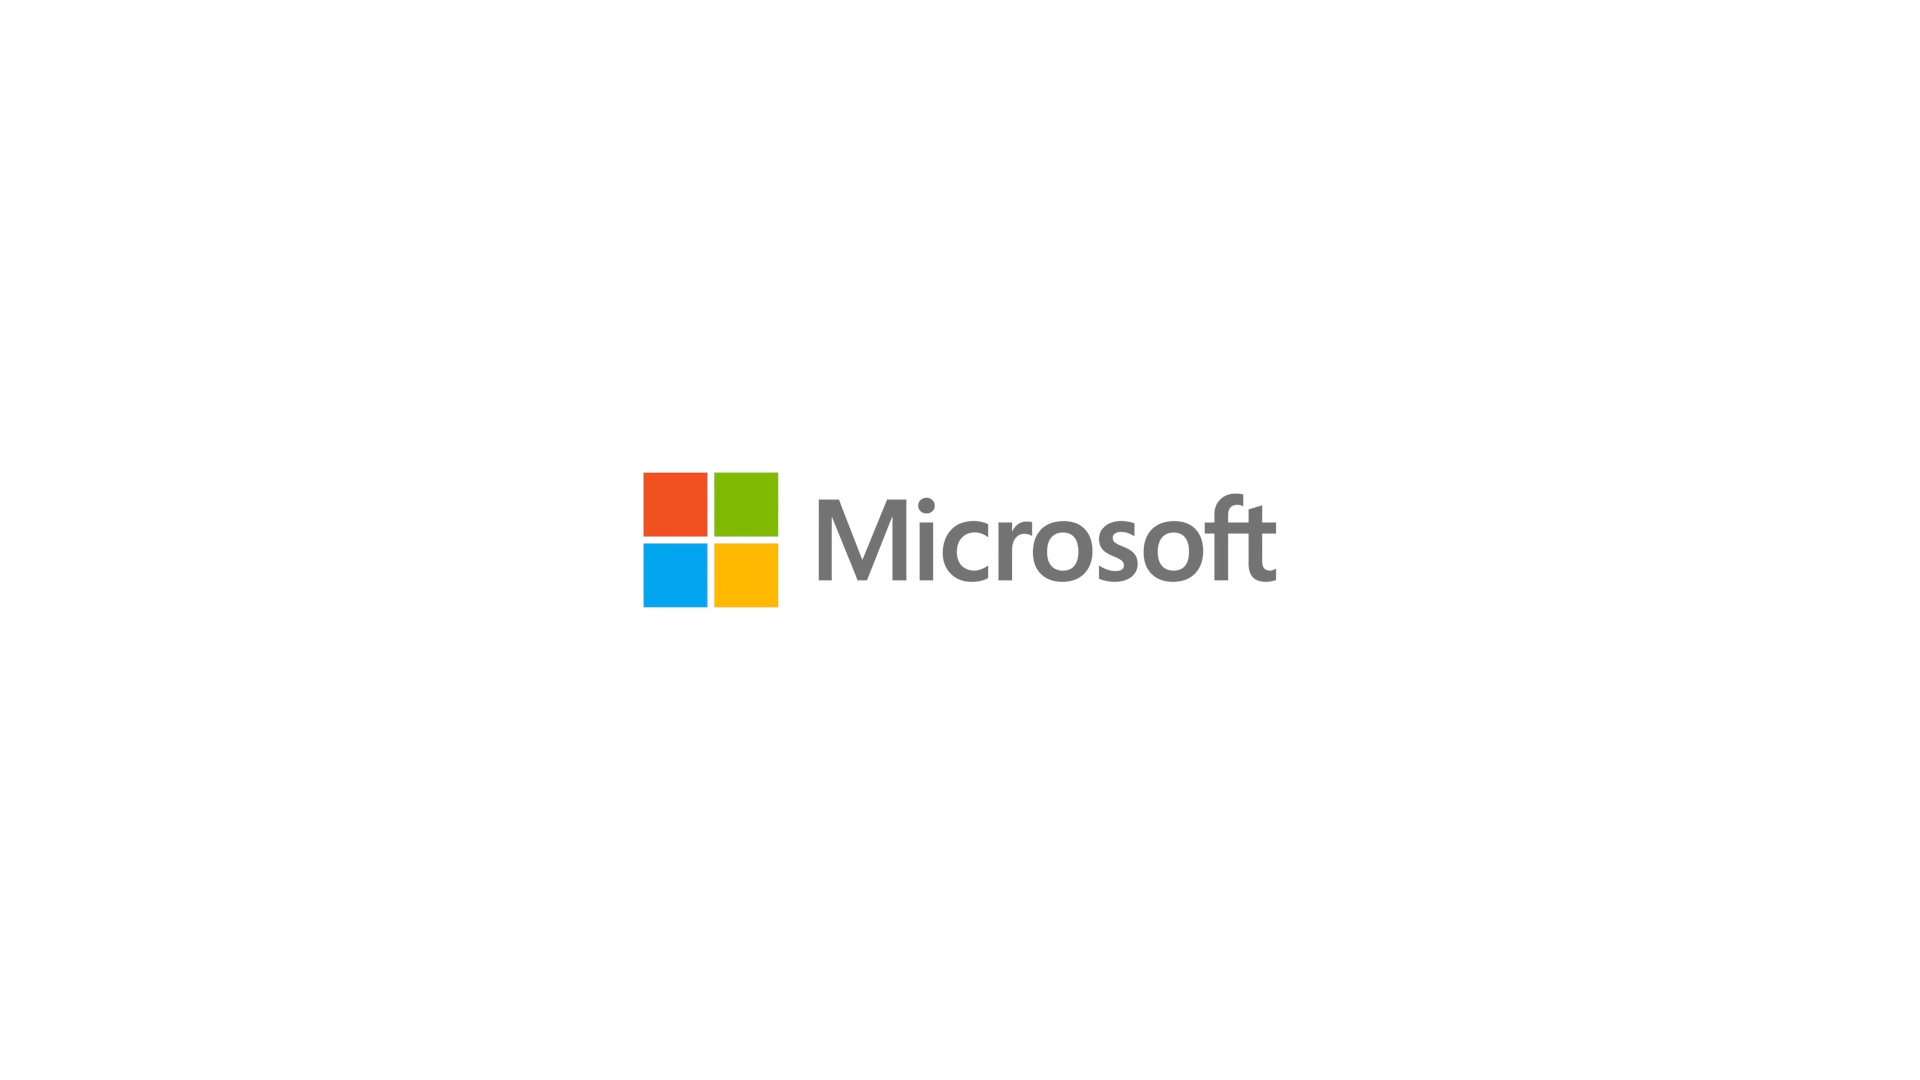 Microsoft – Ascendas Singbridge